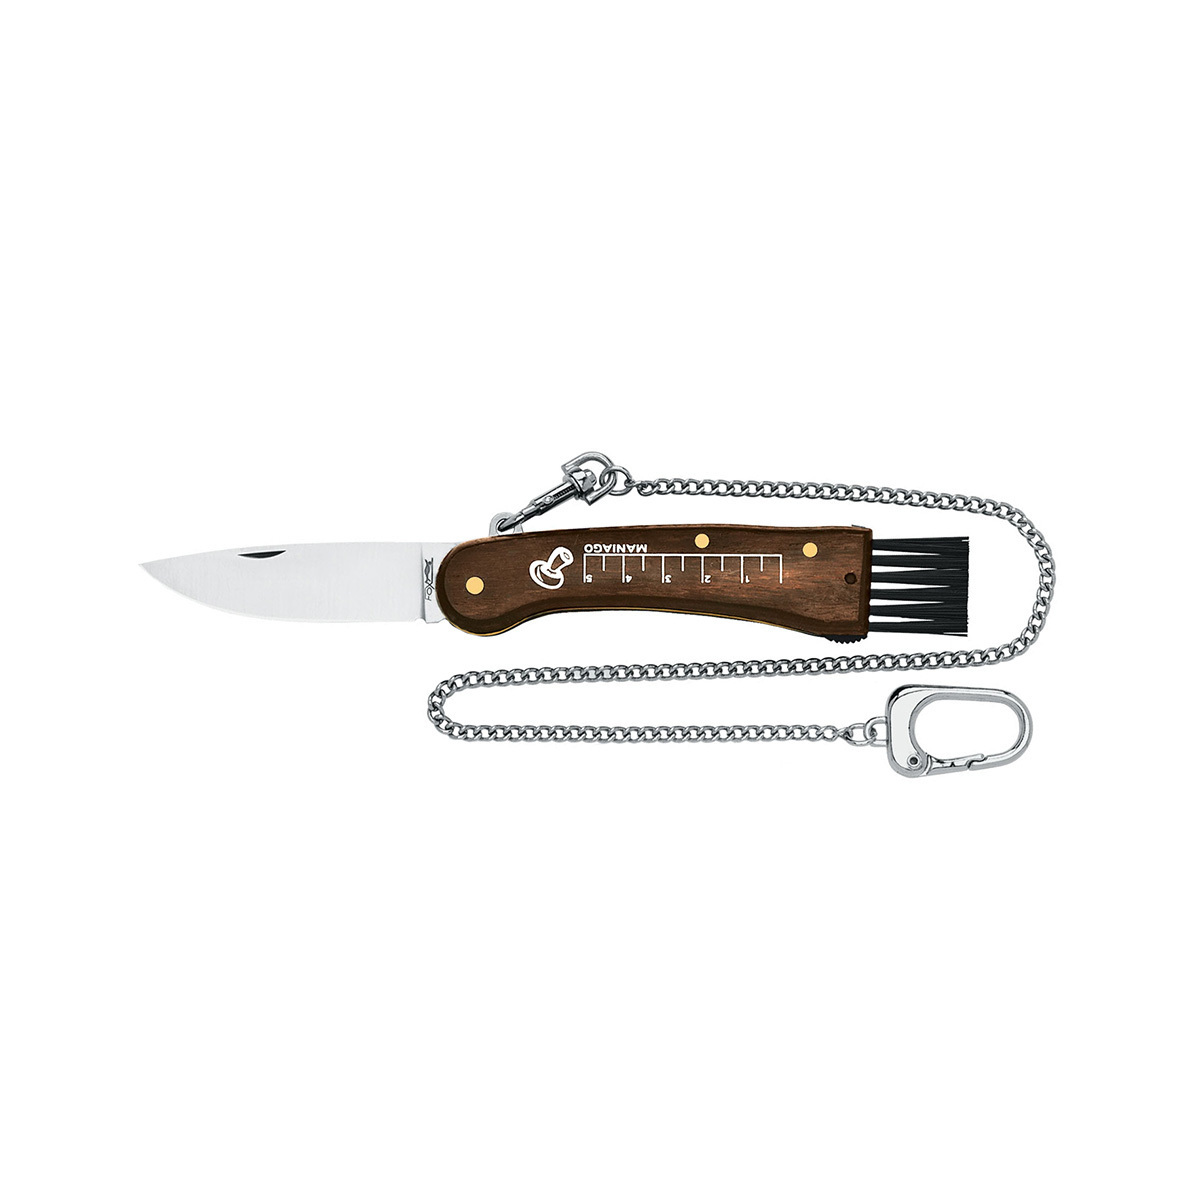 Складной нож Fox Mushrooms Knife, сталь 420C, рукоять палисандр - фото 1